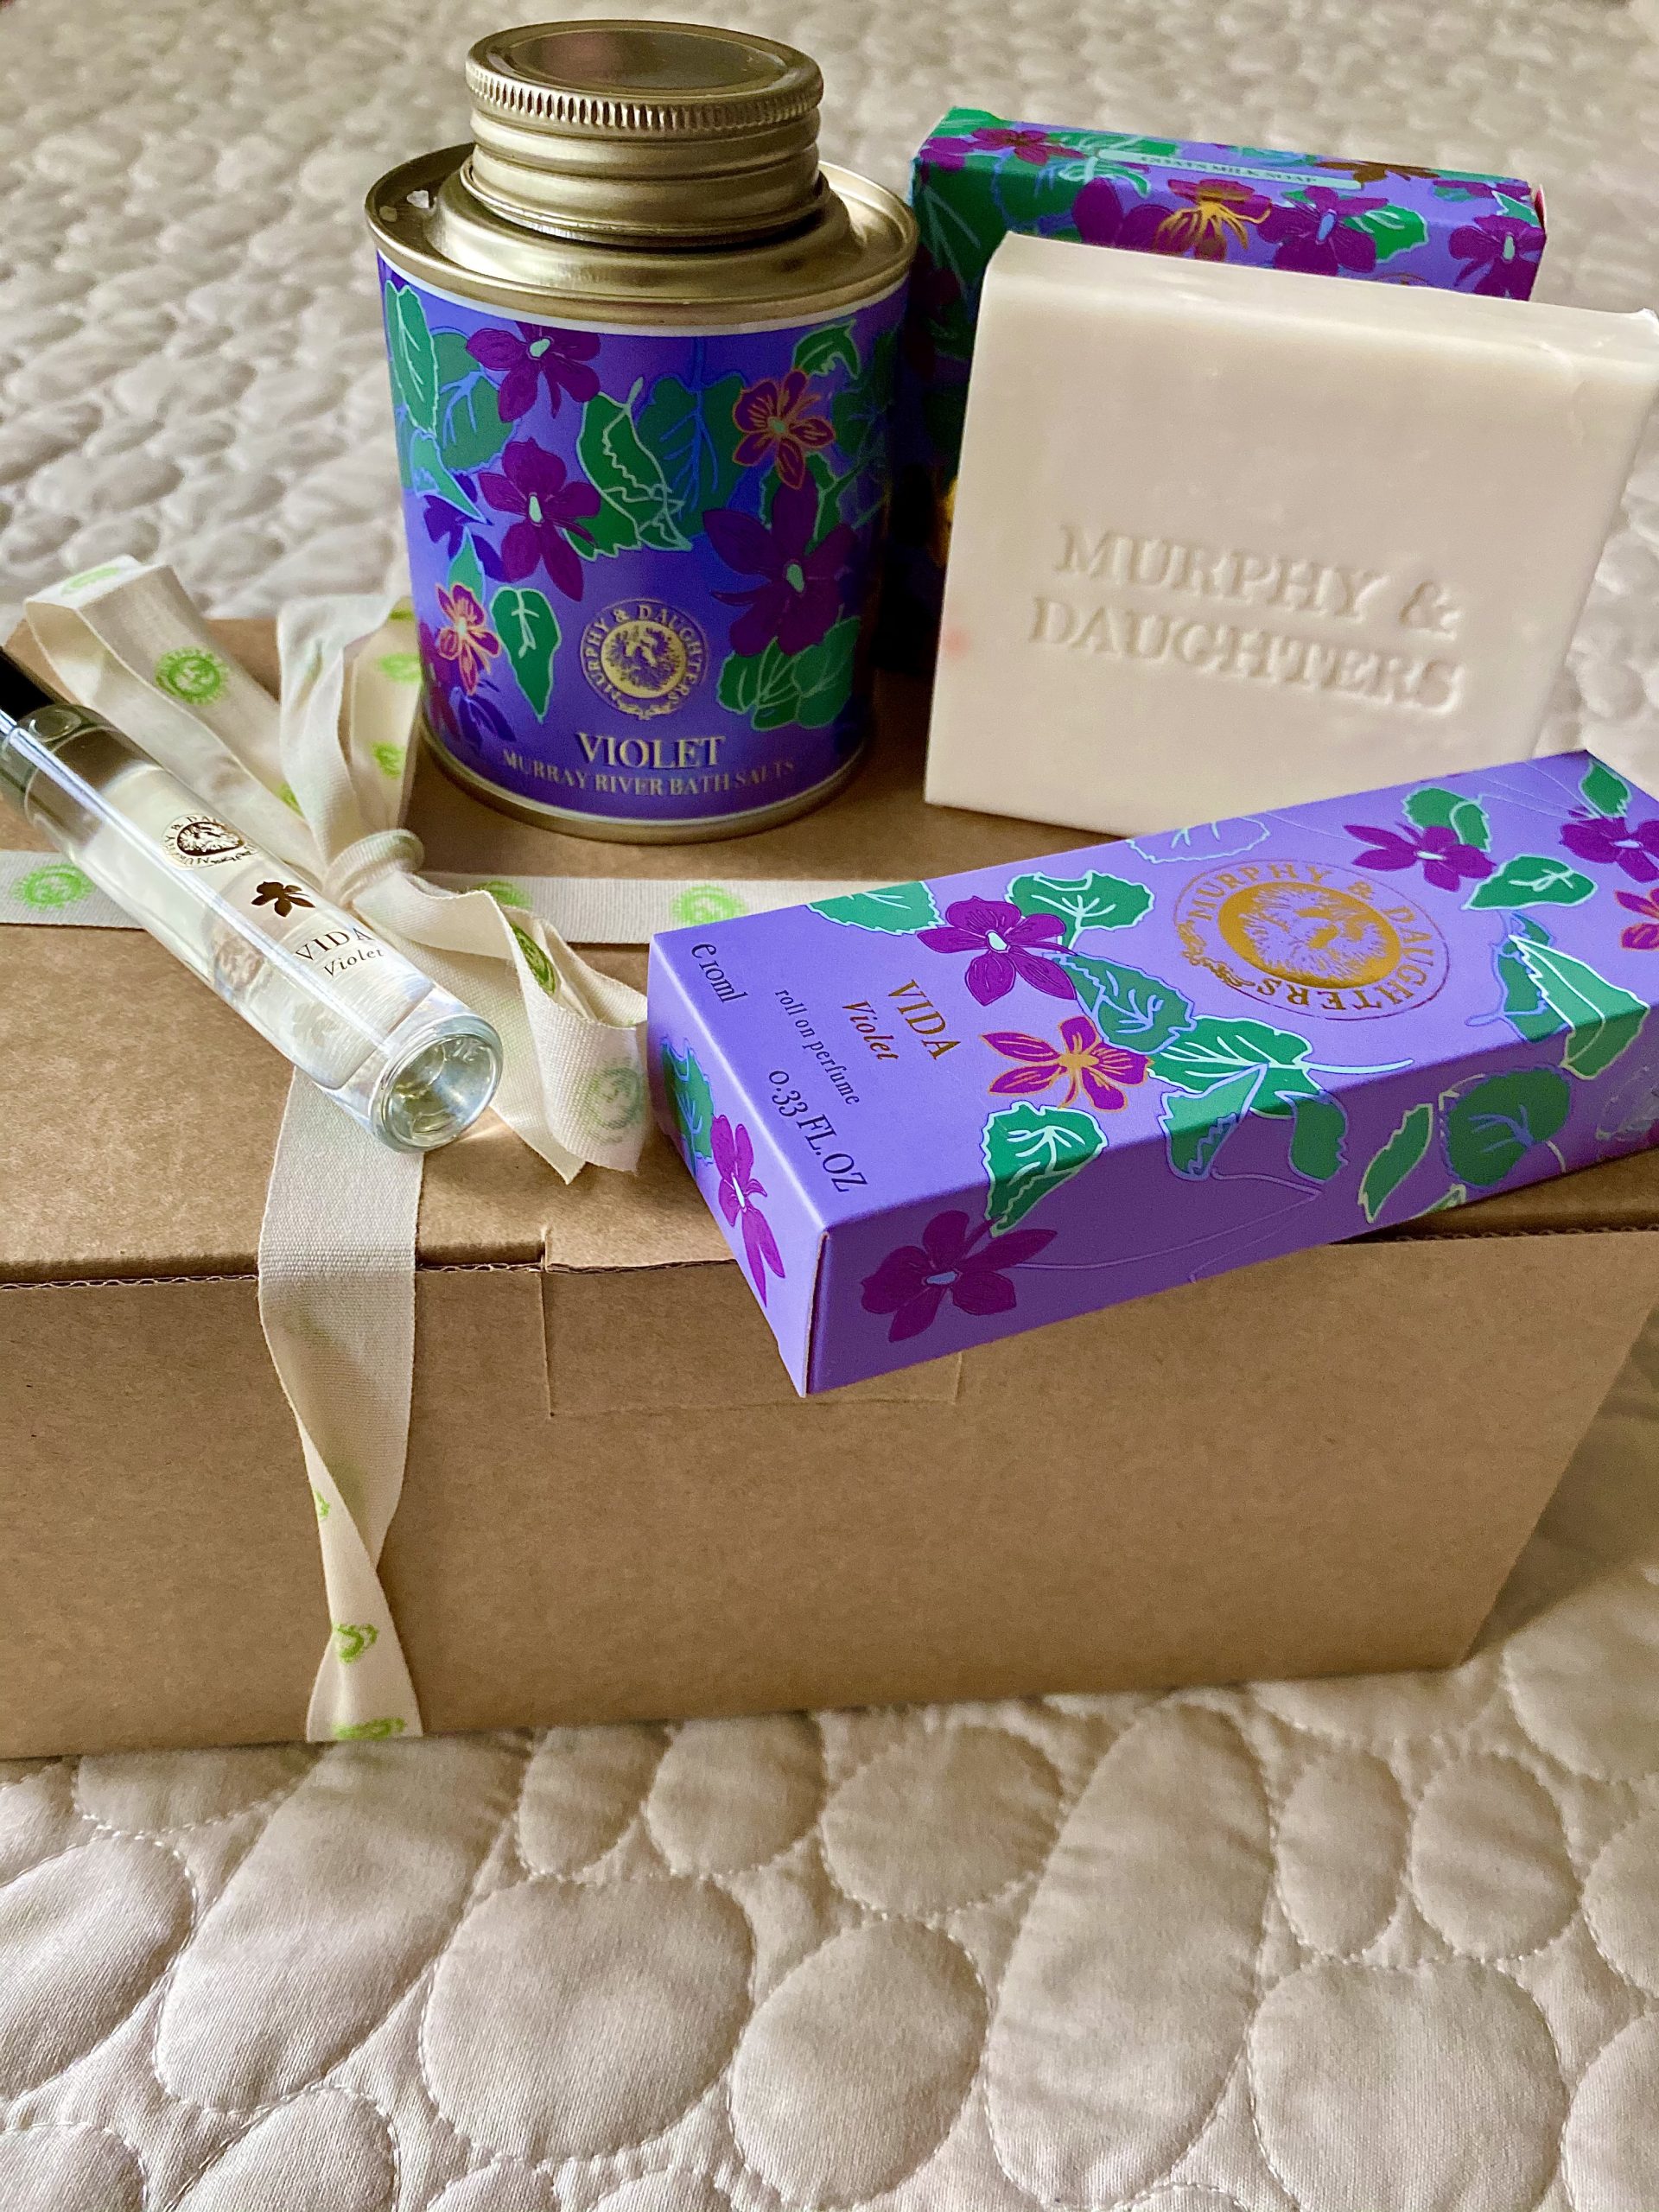 Great Gift Idea: Murphy & Daughters Violet Botanicals